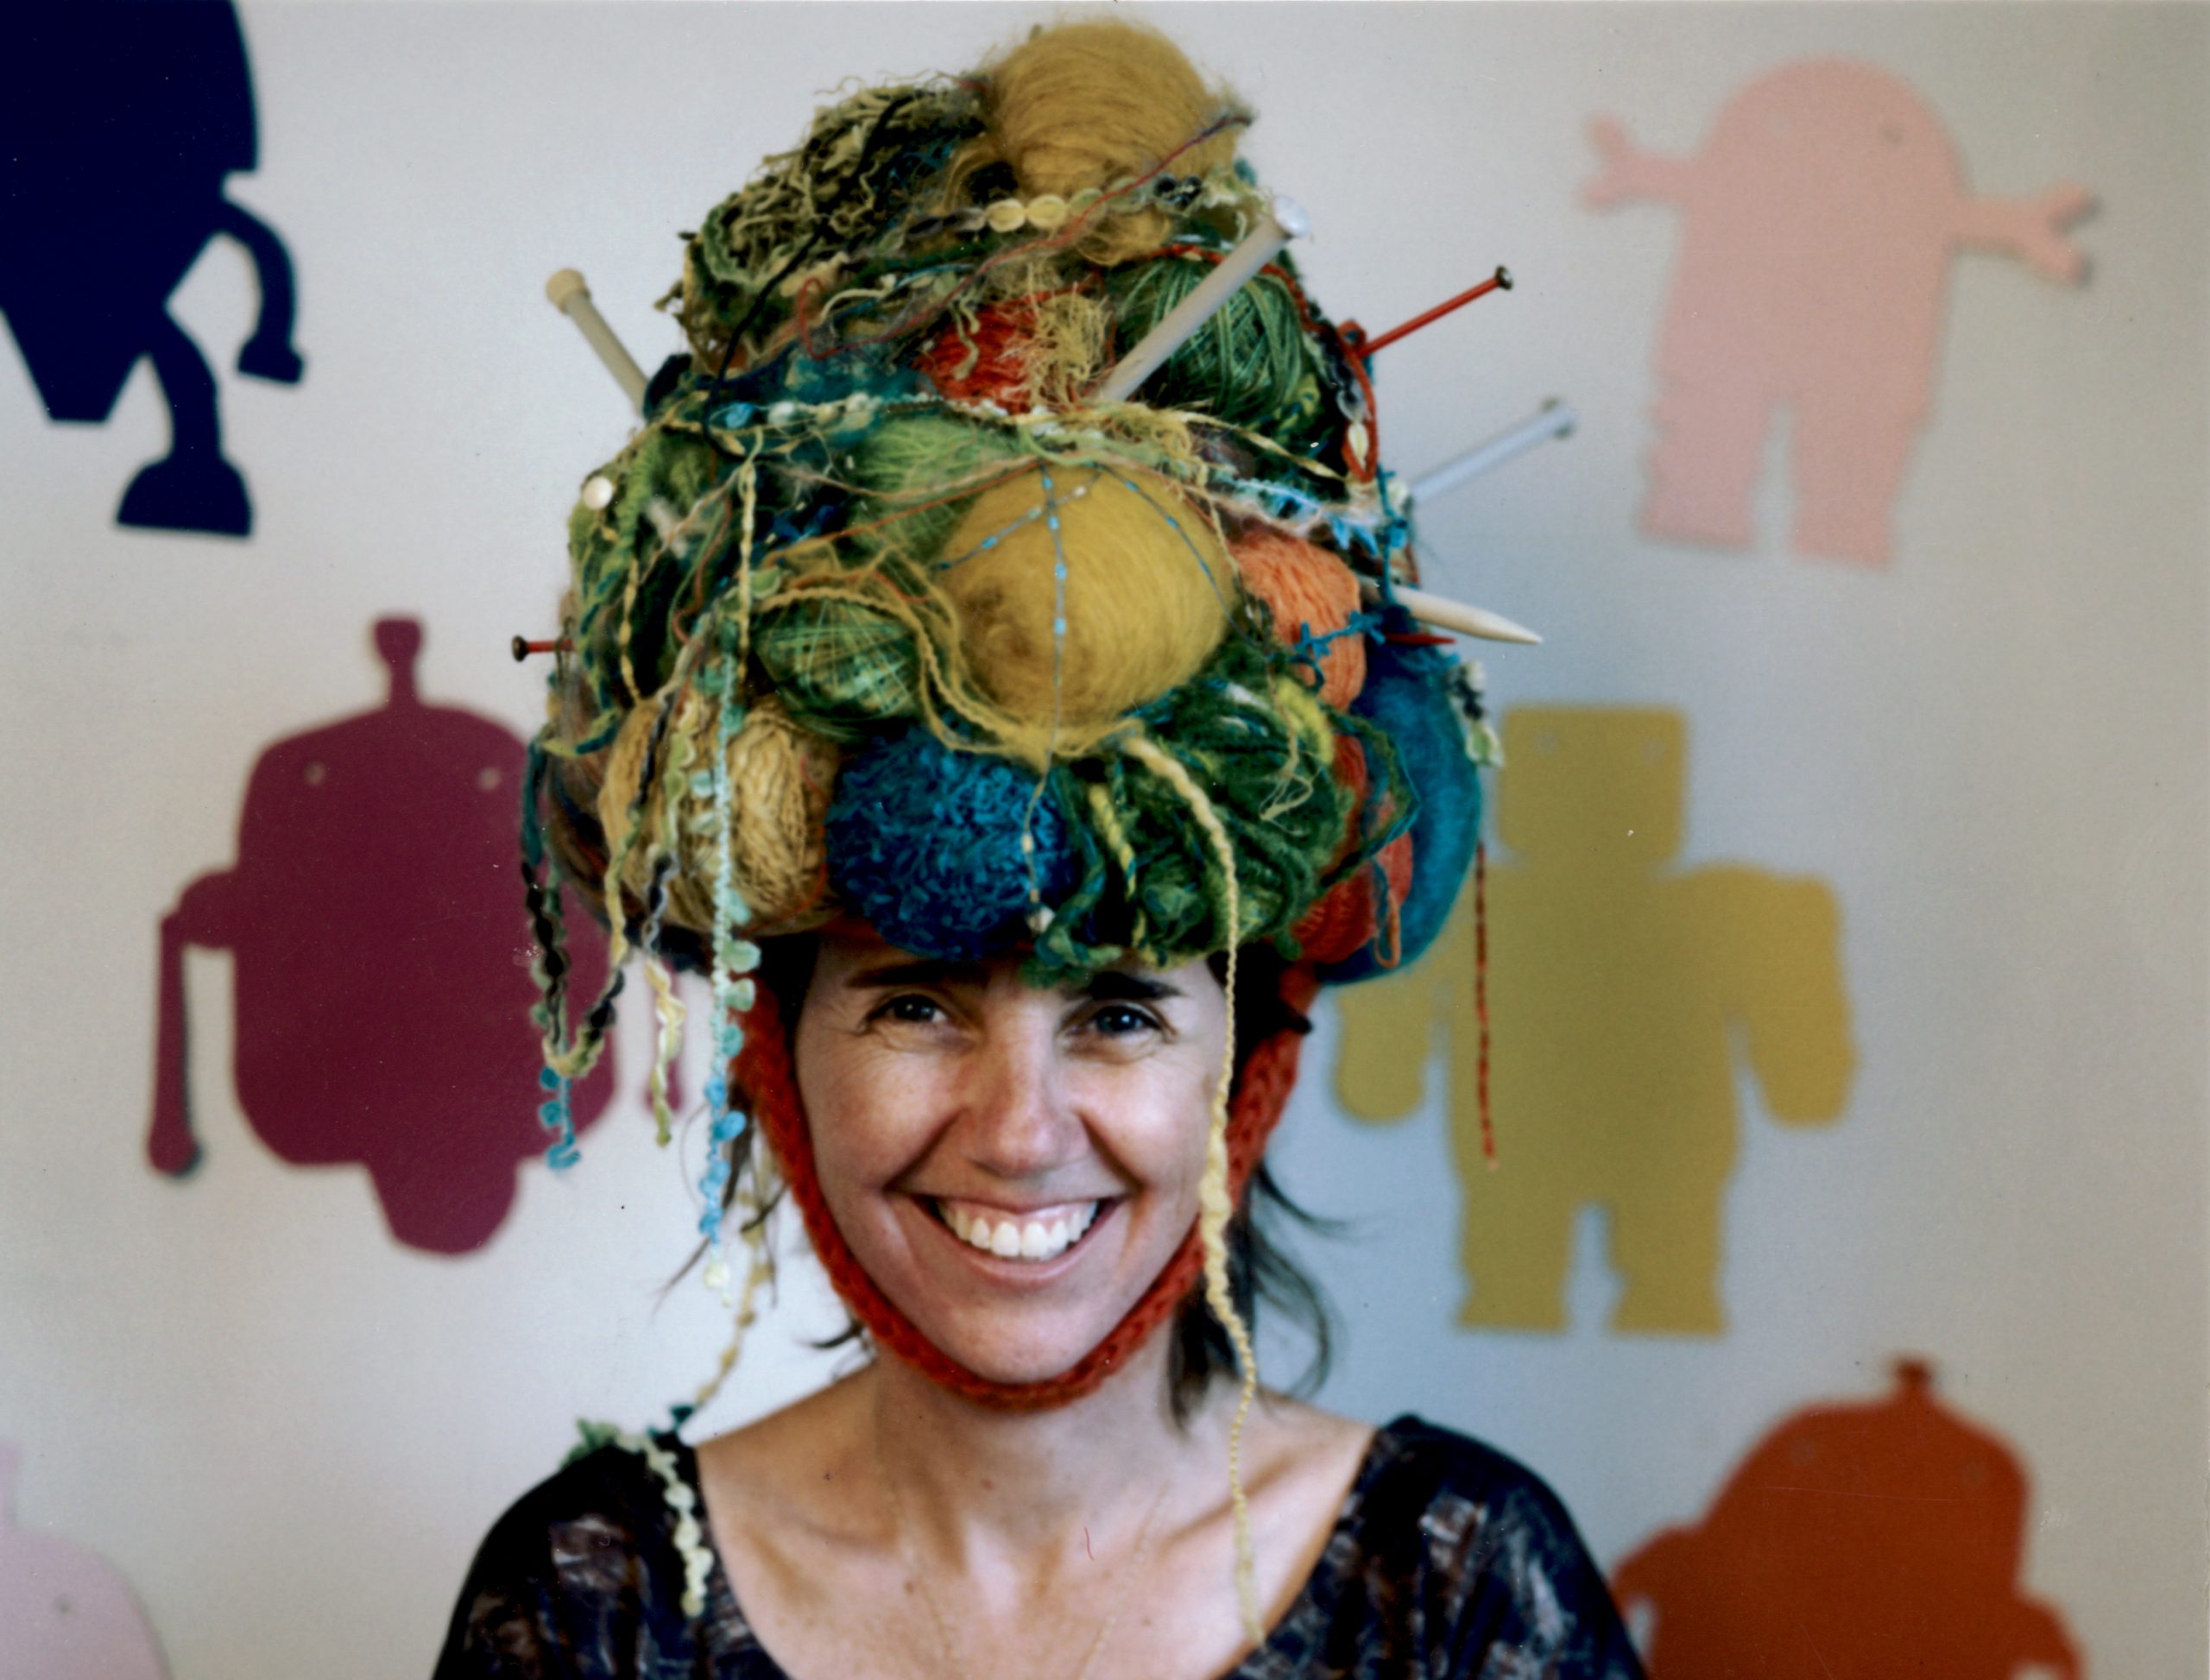 Greta Grip, artist, wearing her art as a hat